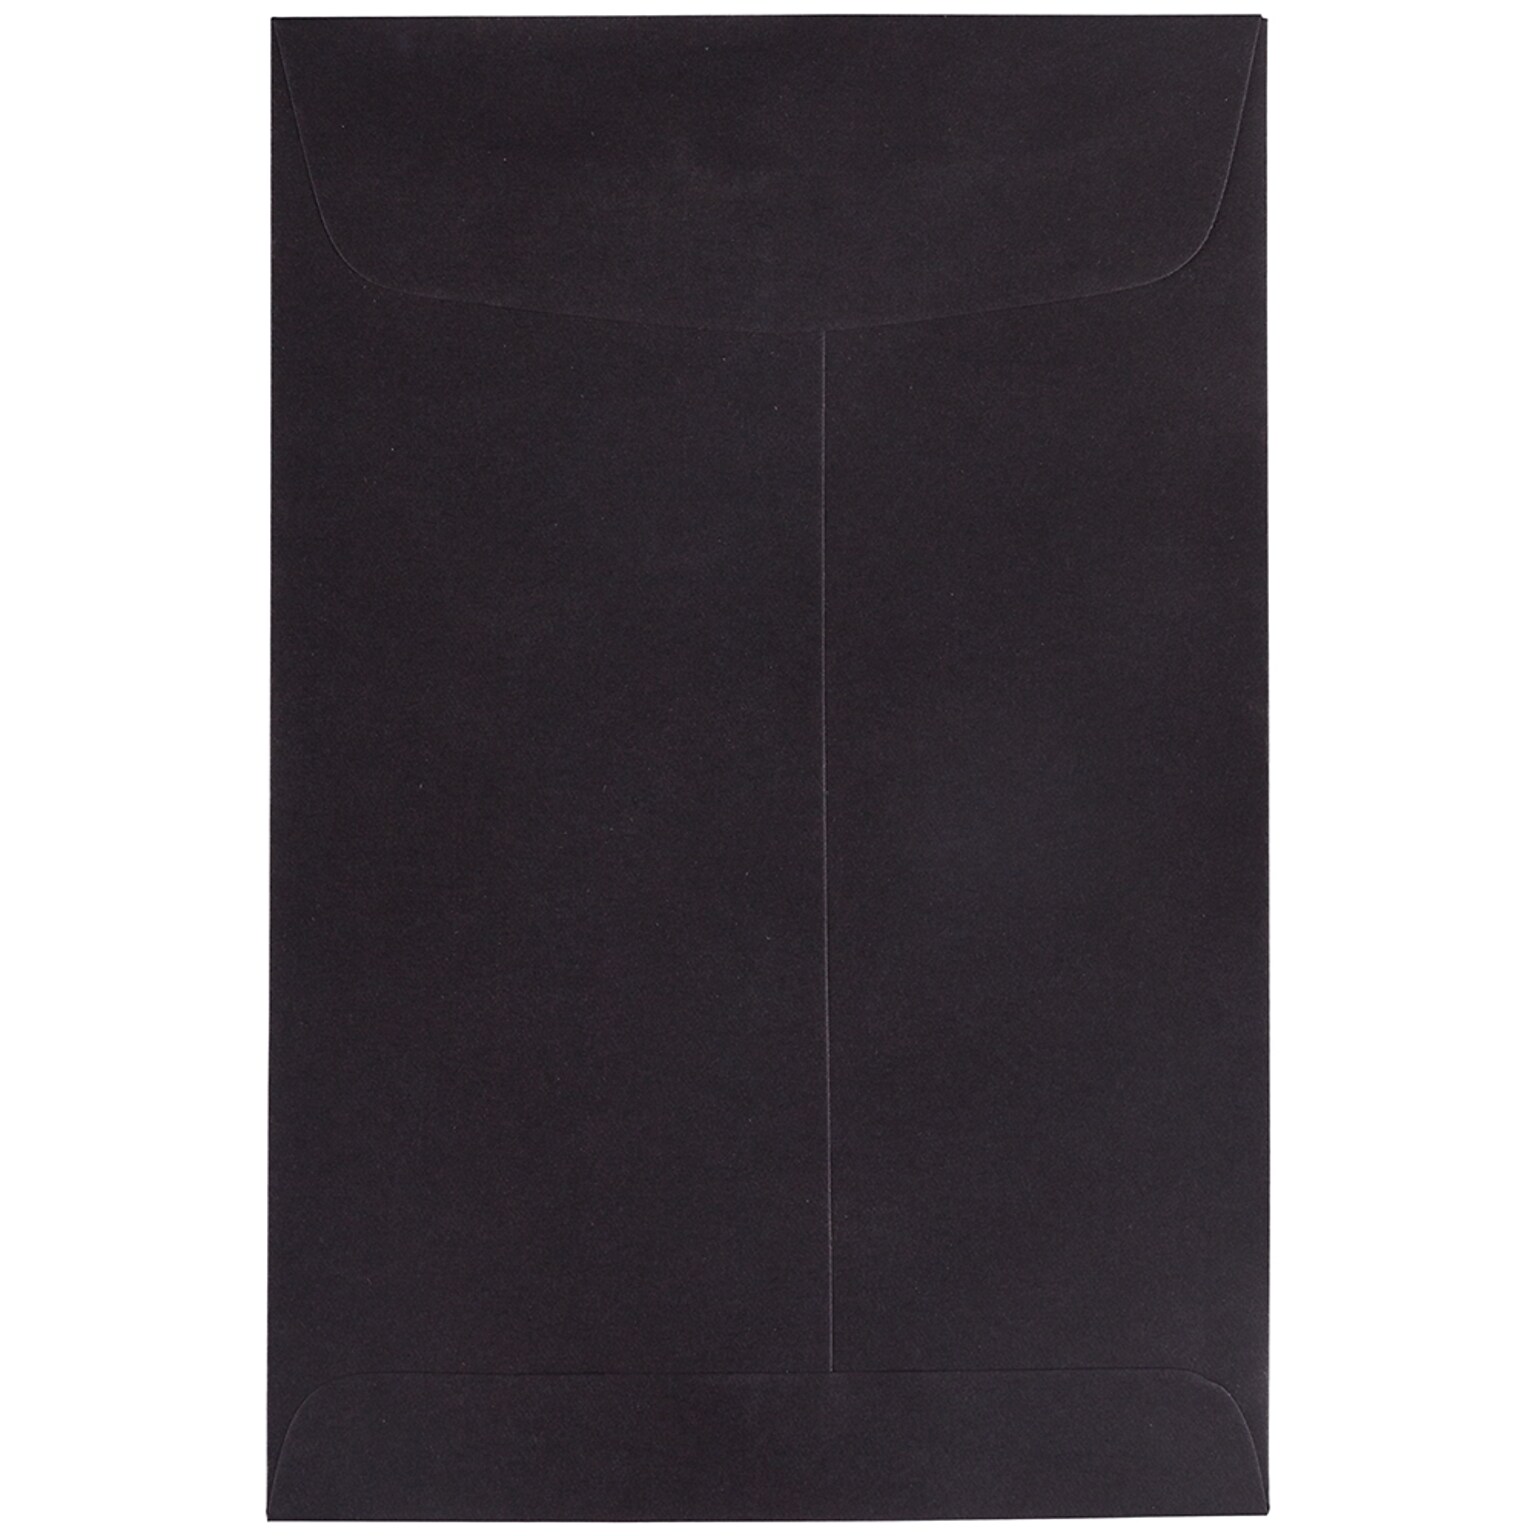 JAM Paper 6 x 9 Open End Catalog Envelopes, Black, 100/Pack (88095)